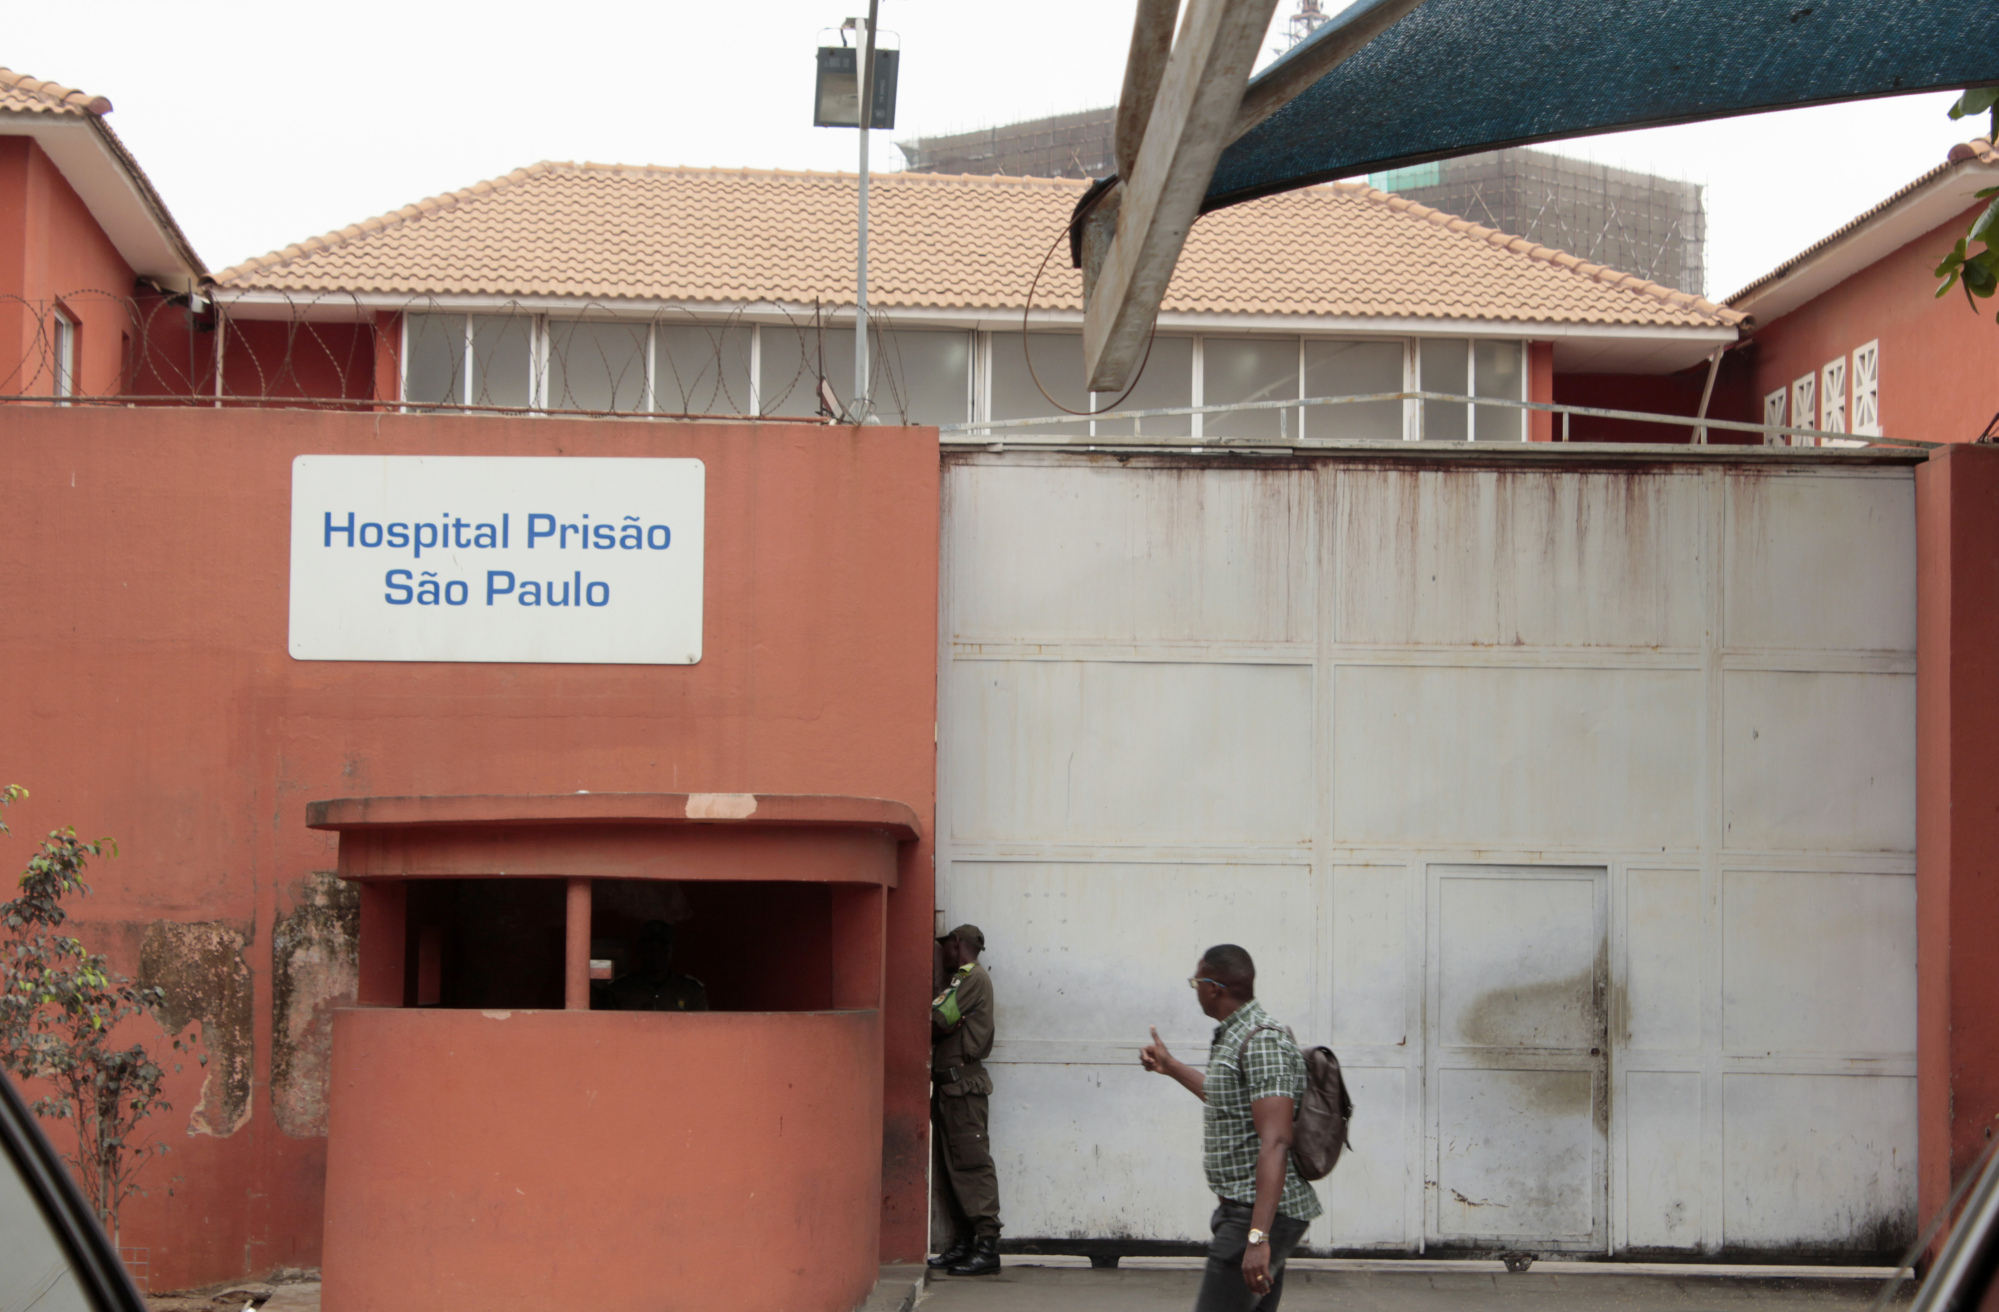 The prison hospital where Jose Filomeno is being held, in Luanda.